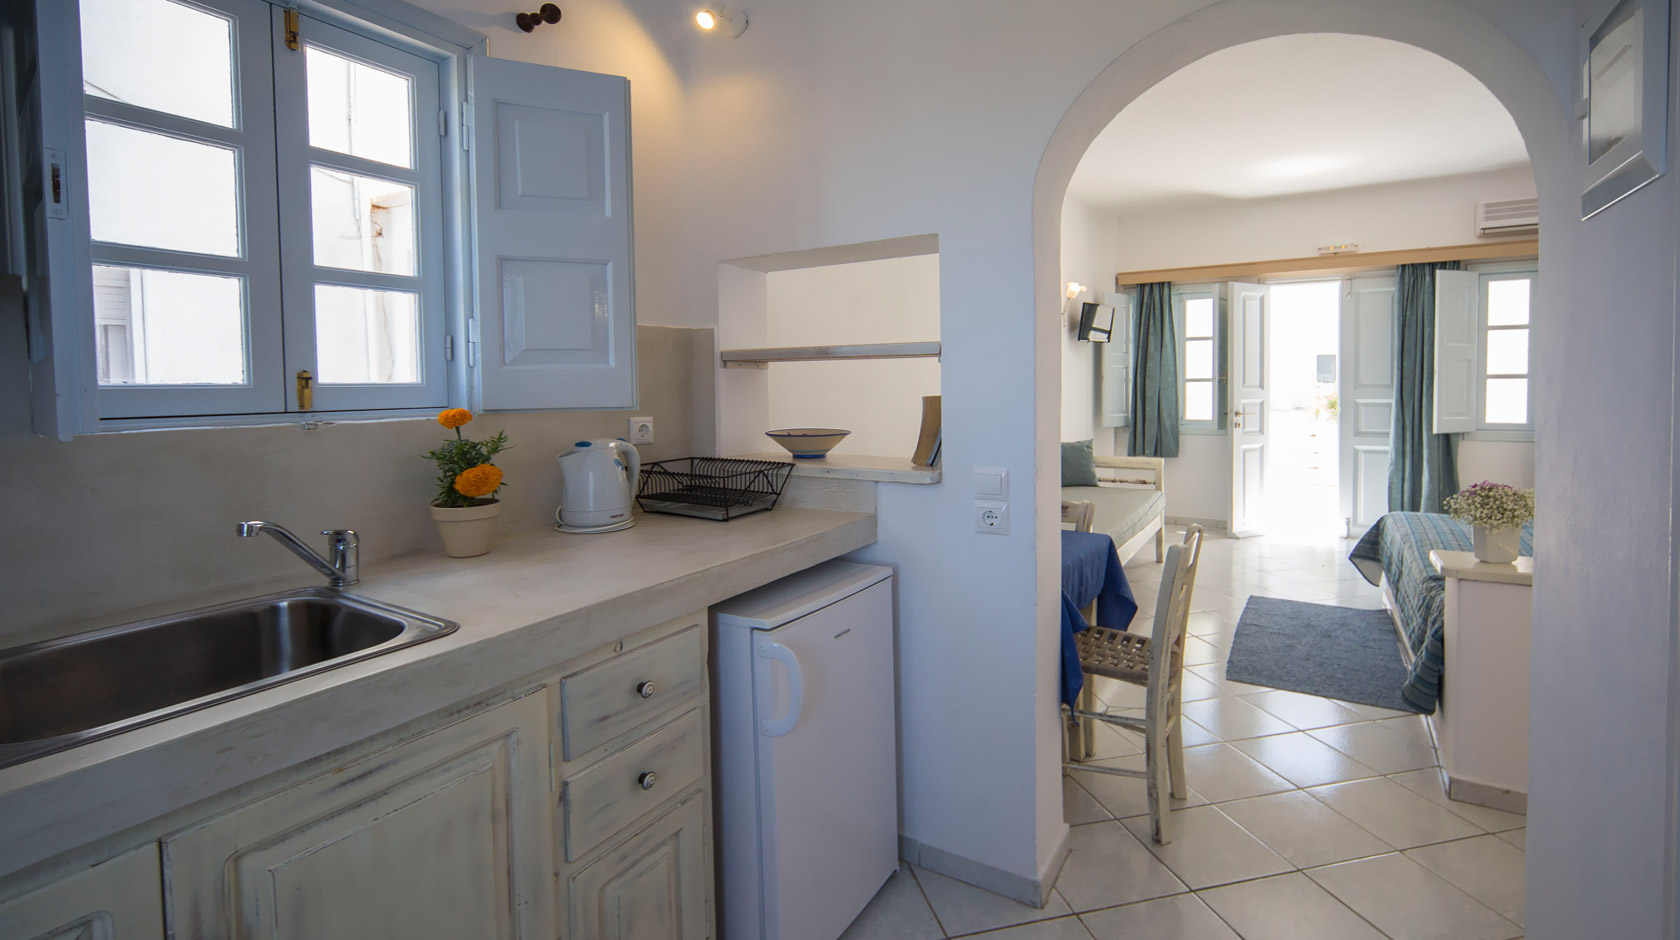 Oia Santorini Apartments & Studios - Interior View